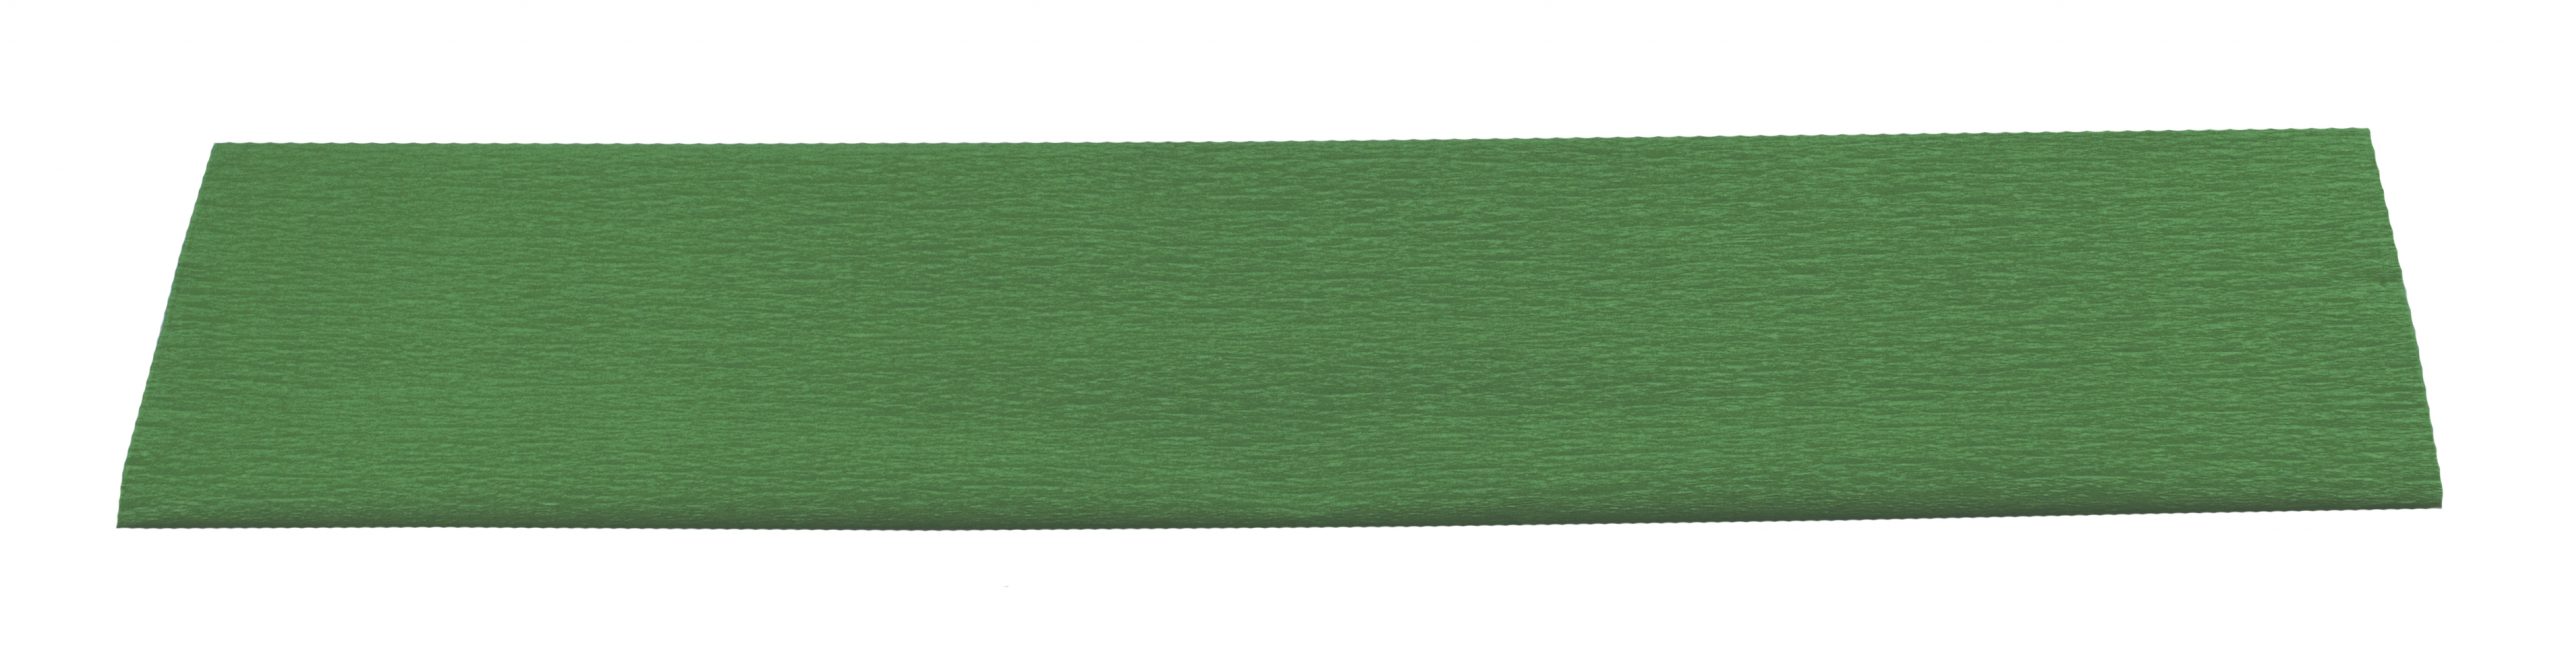 Hârtie creponată Hobby 50 x 200 cm verde, Herlitz